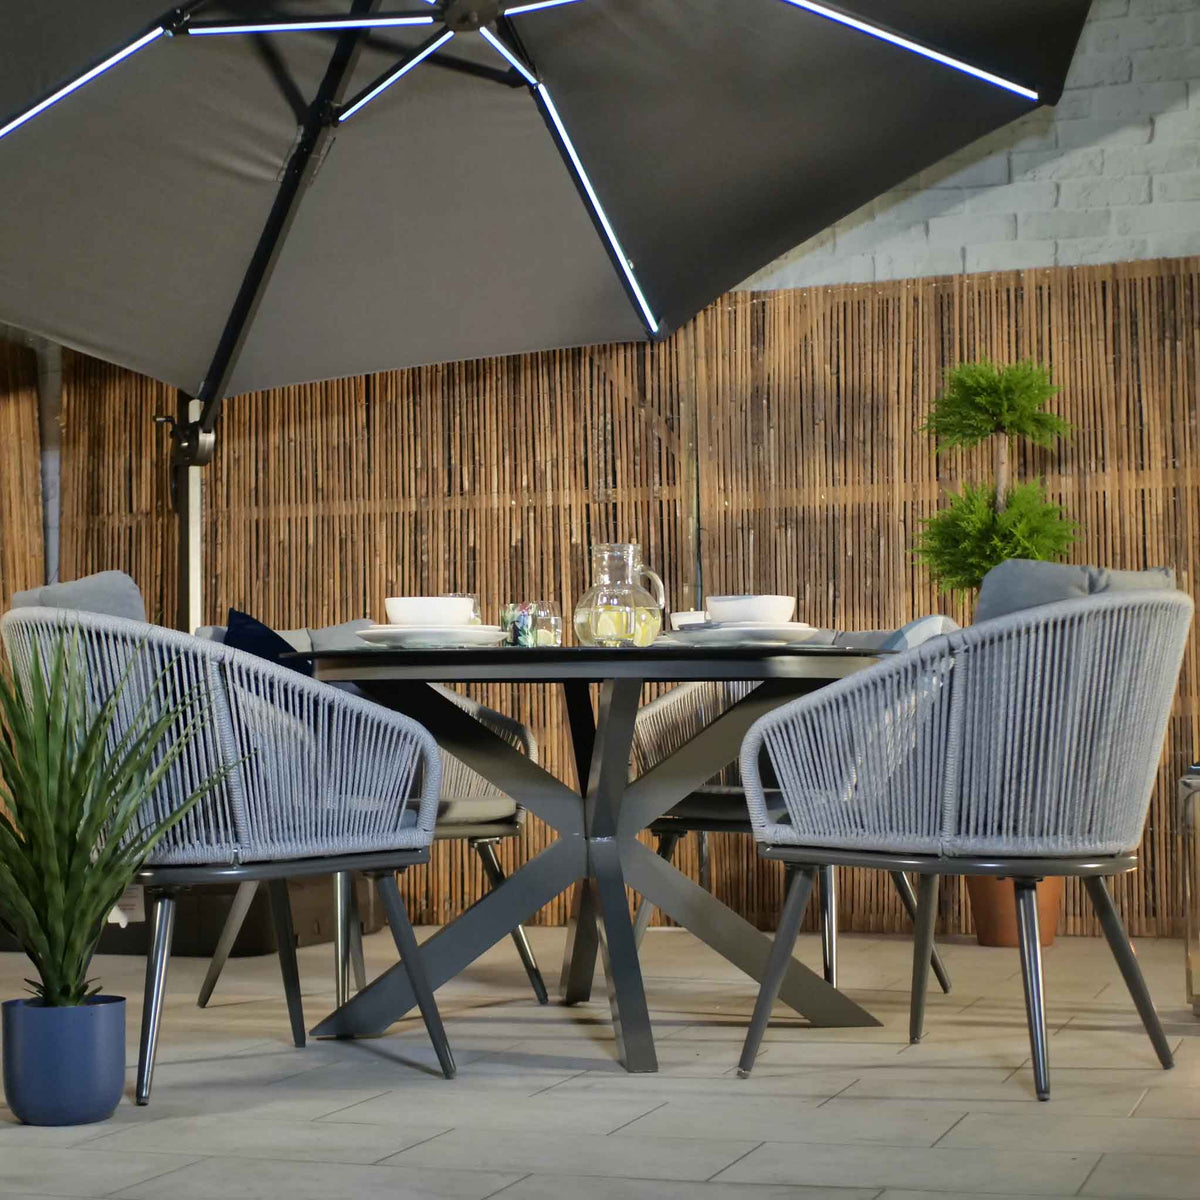 Aspen 4 Seat Stone Look Garden Dining Set with aluminium table frame